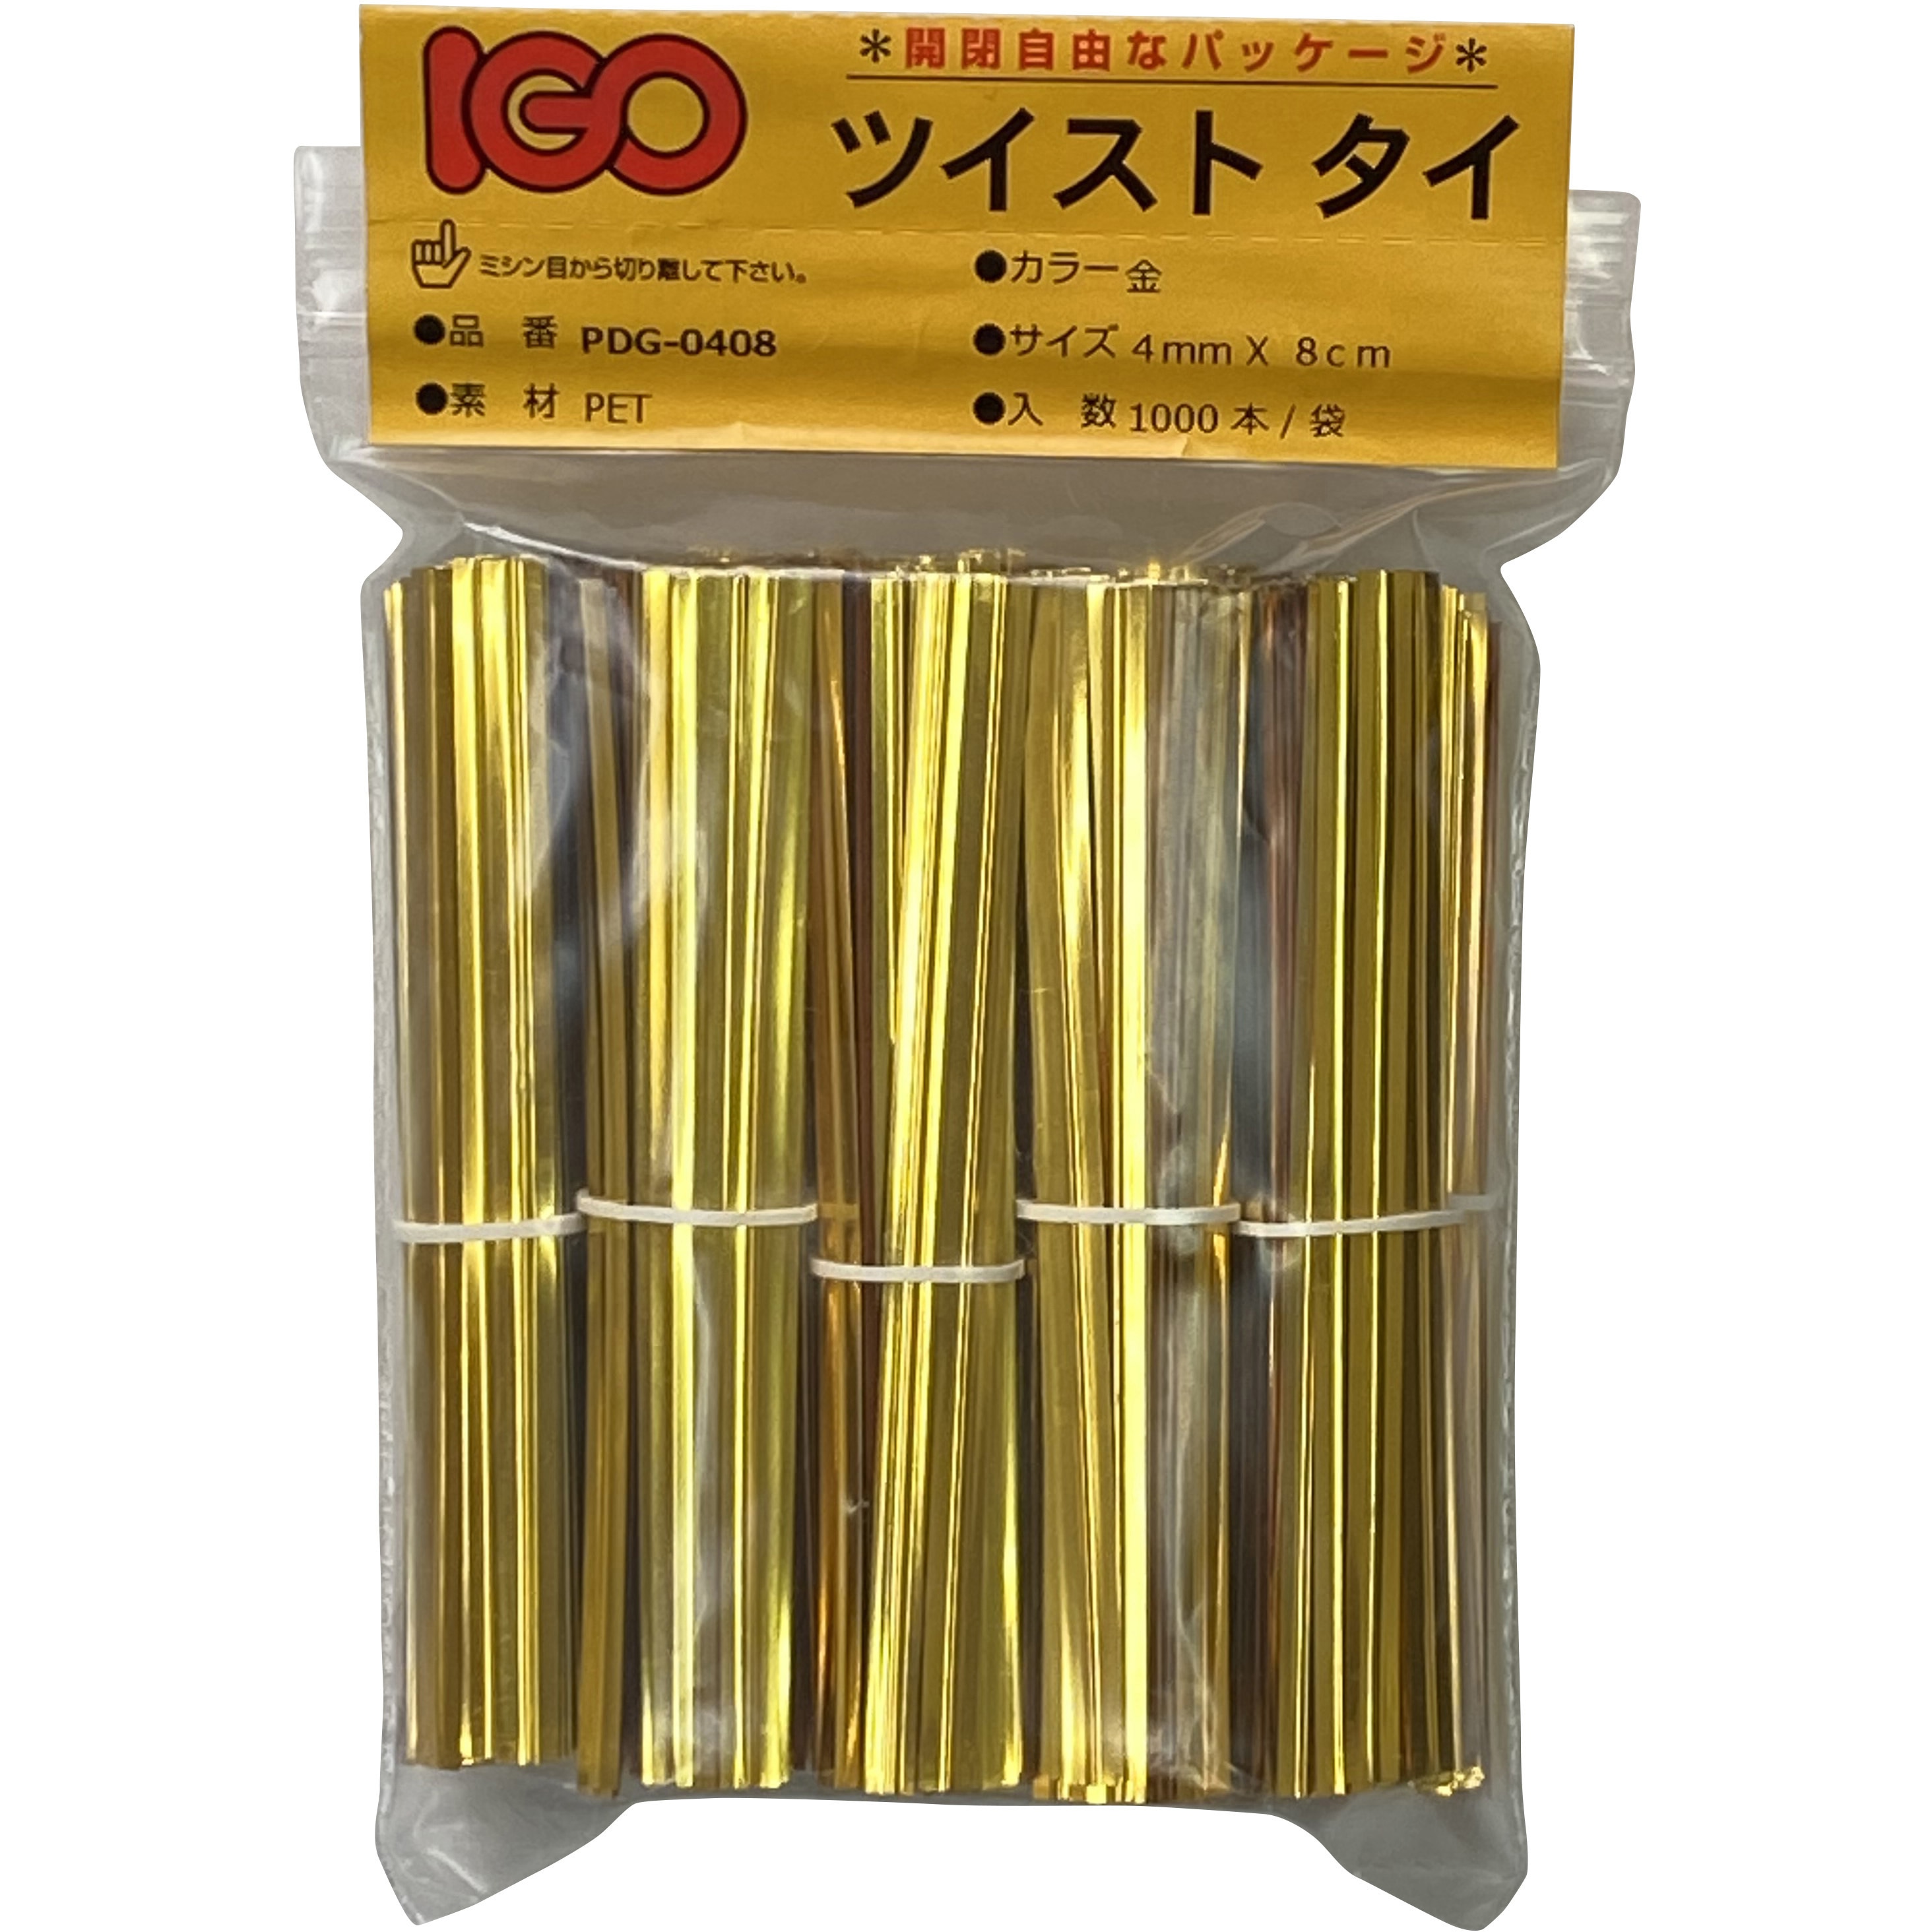 PDG-0408 IGOツイストタイ ペット・タイ カット品 1袋(1000本) IGO